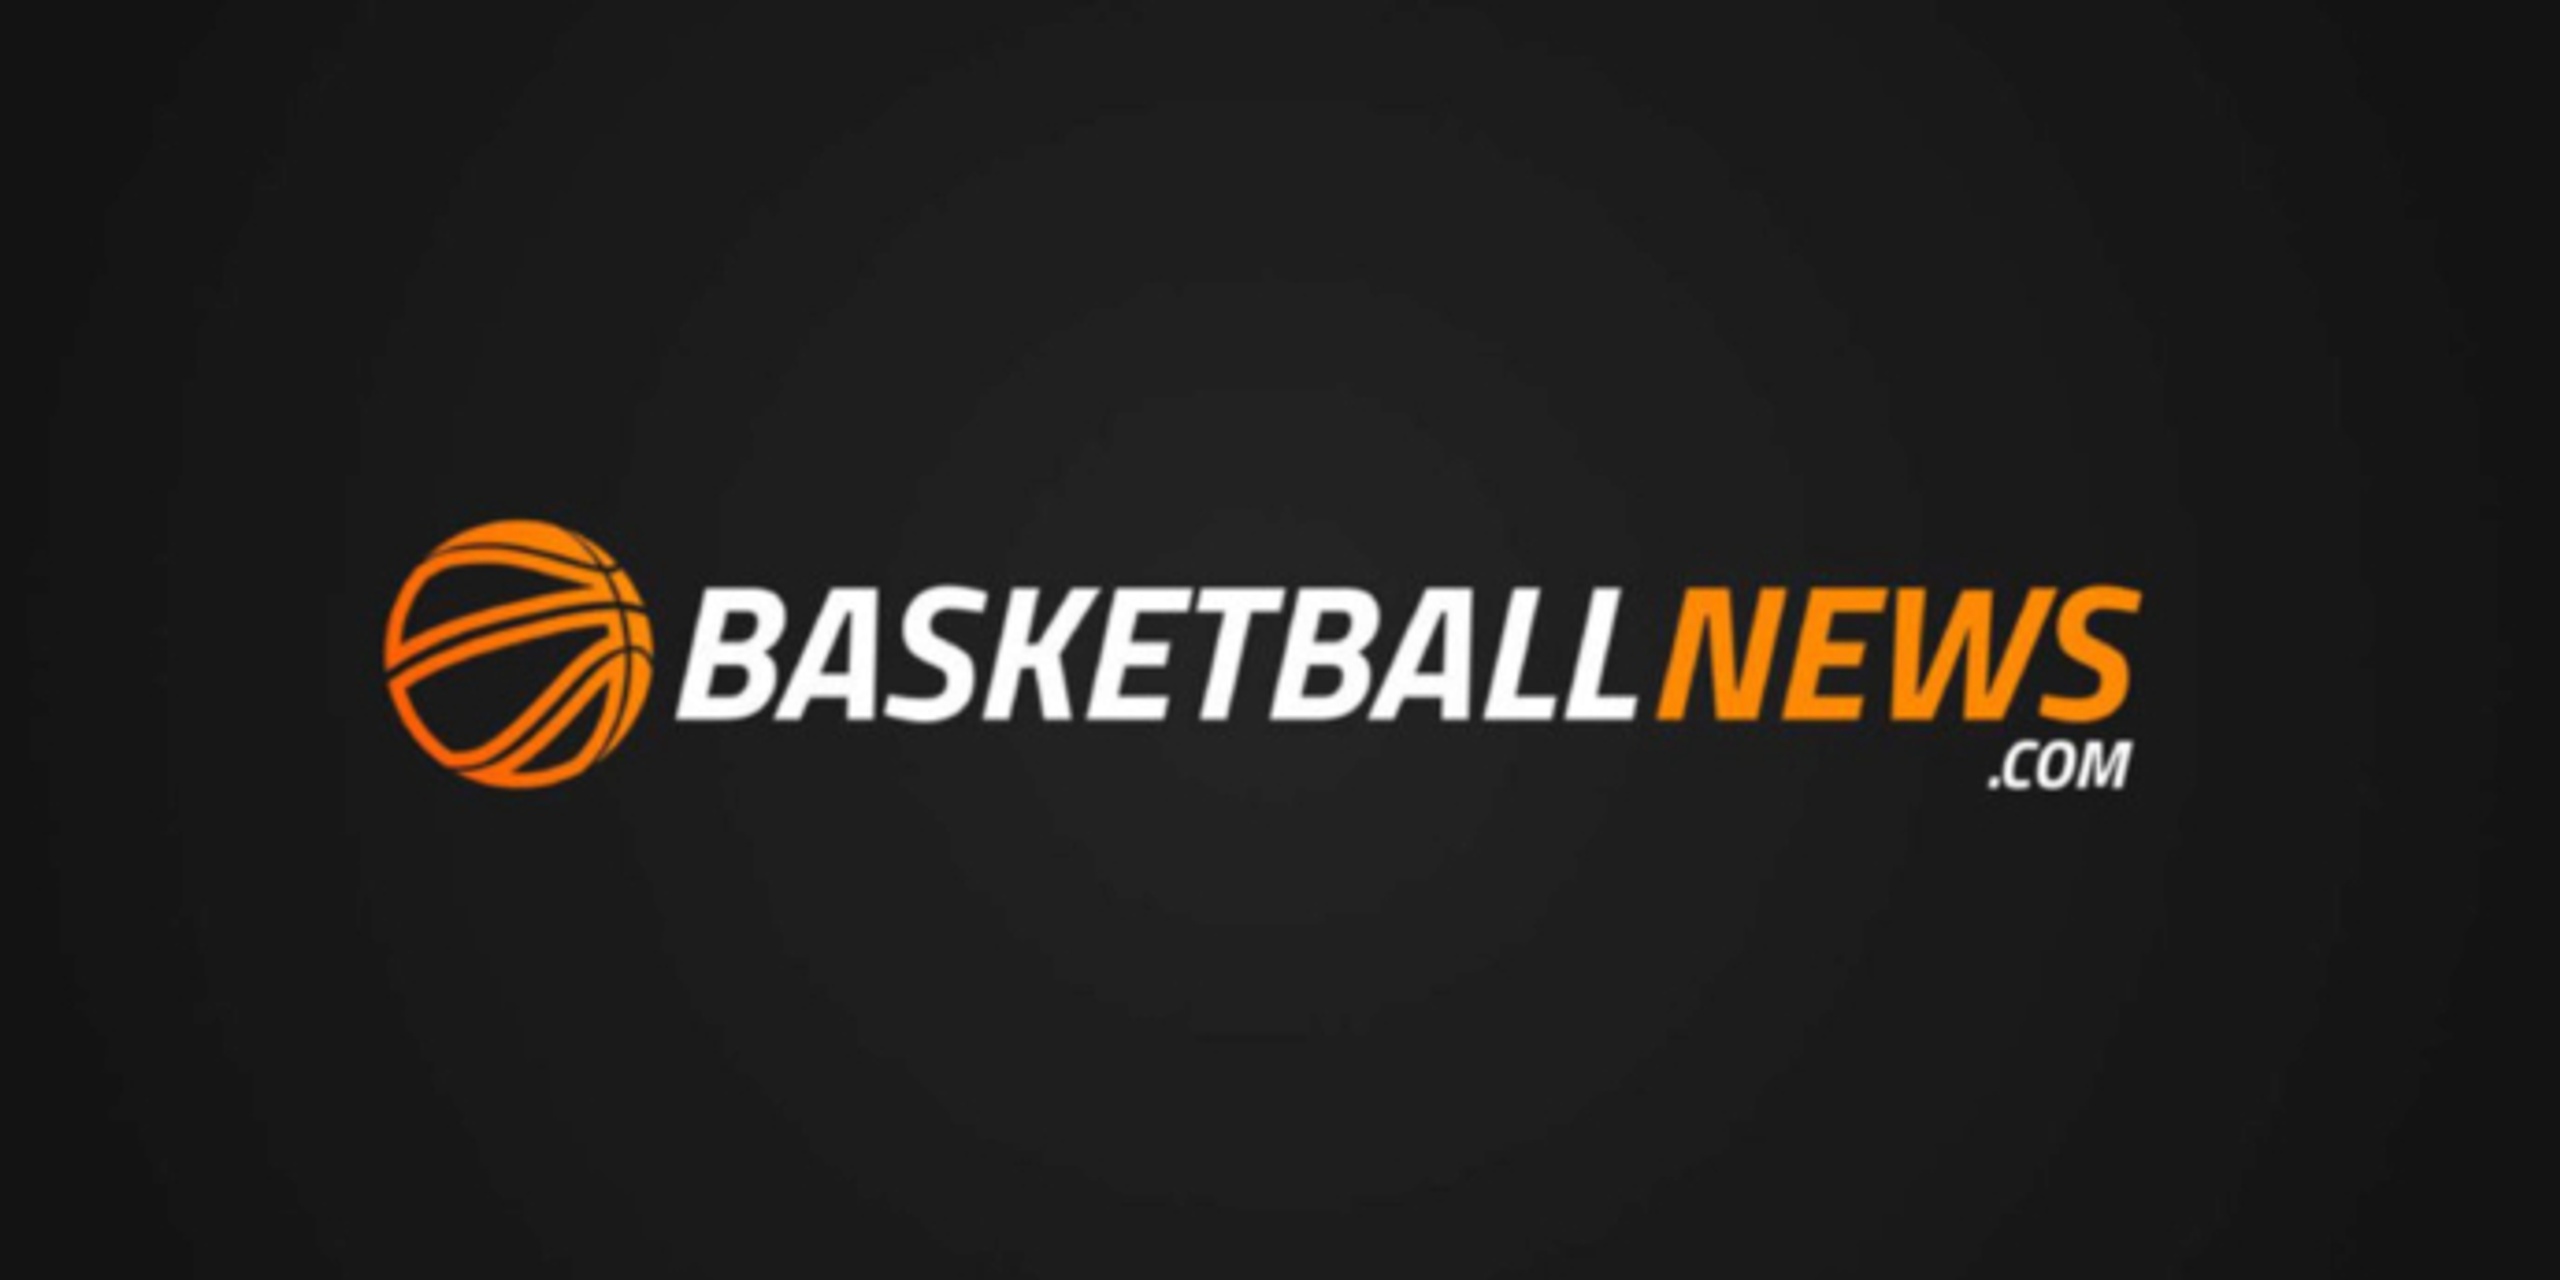 BasketballNews.com adds Matt Babcock to oversee NBA Draft coverage